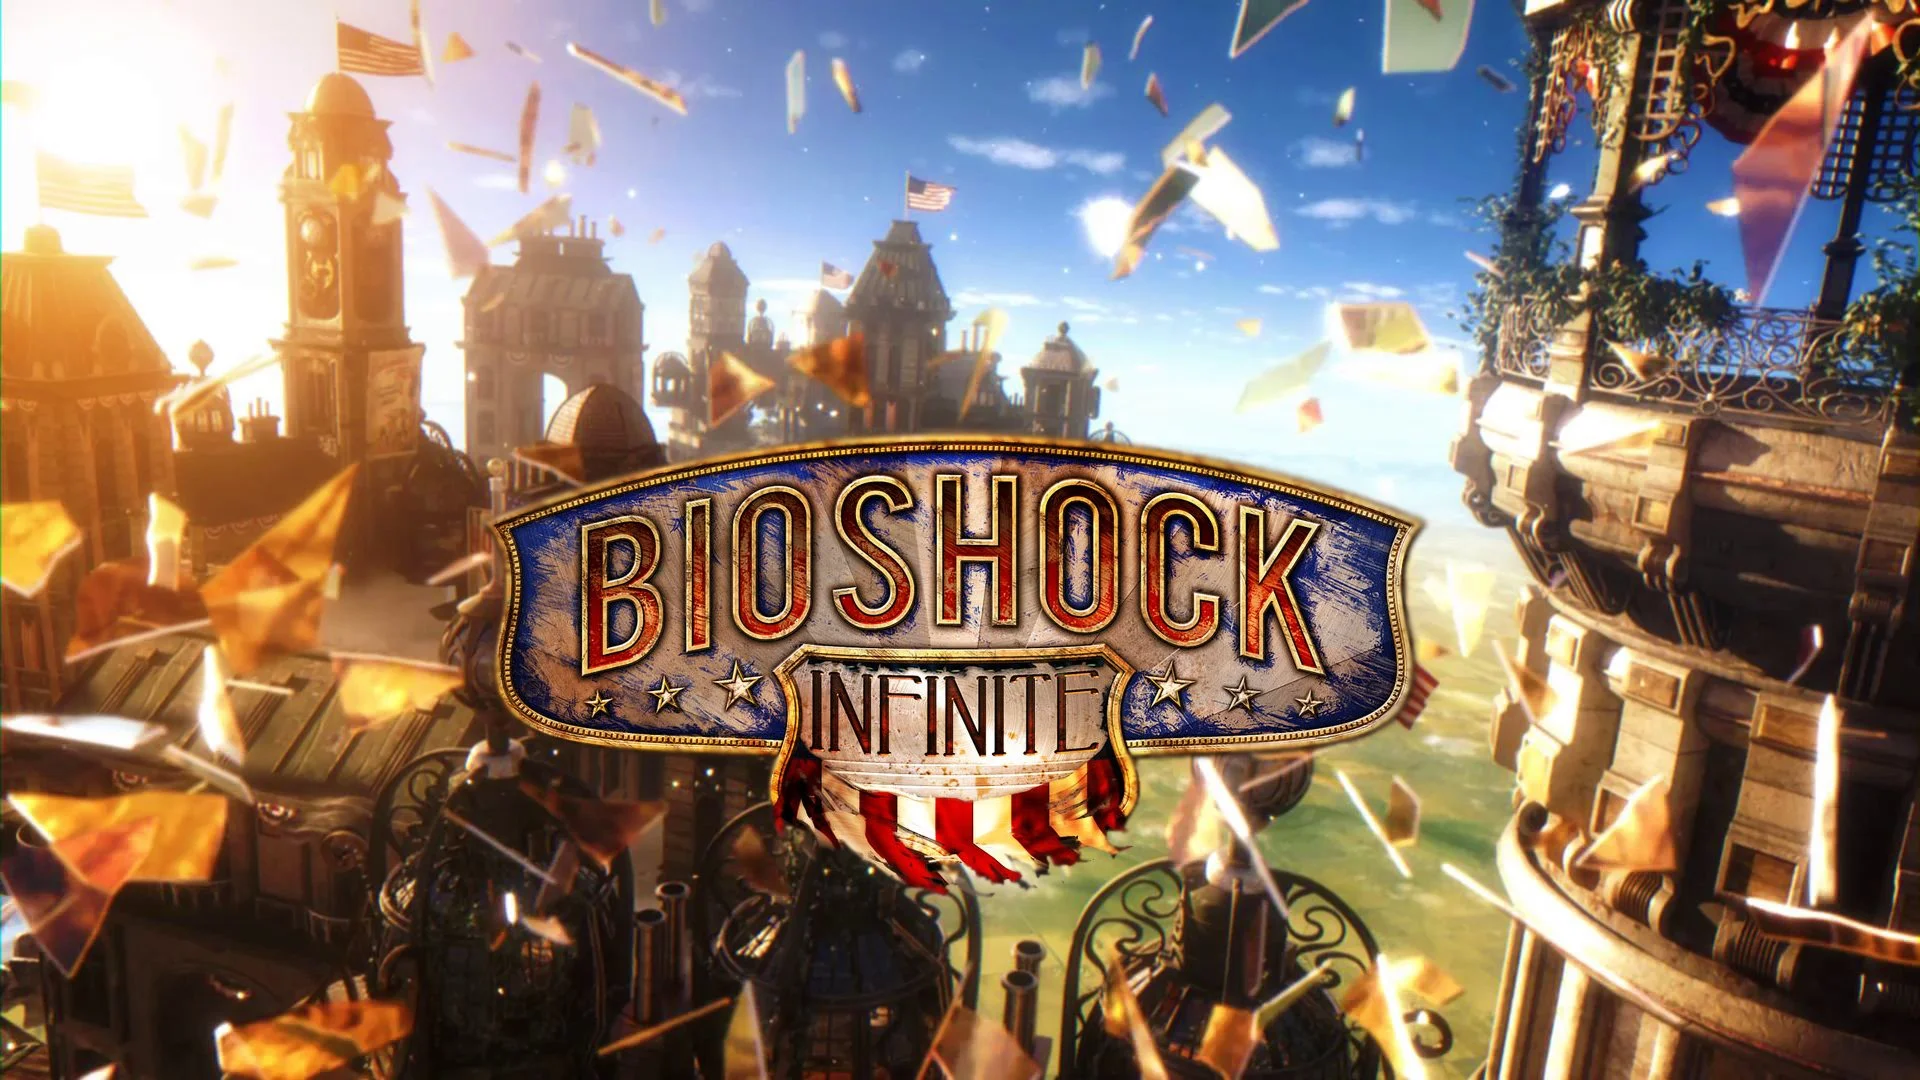   BioShock Infinite. Ад в раю - изображение обложка